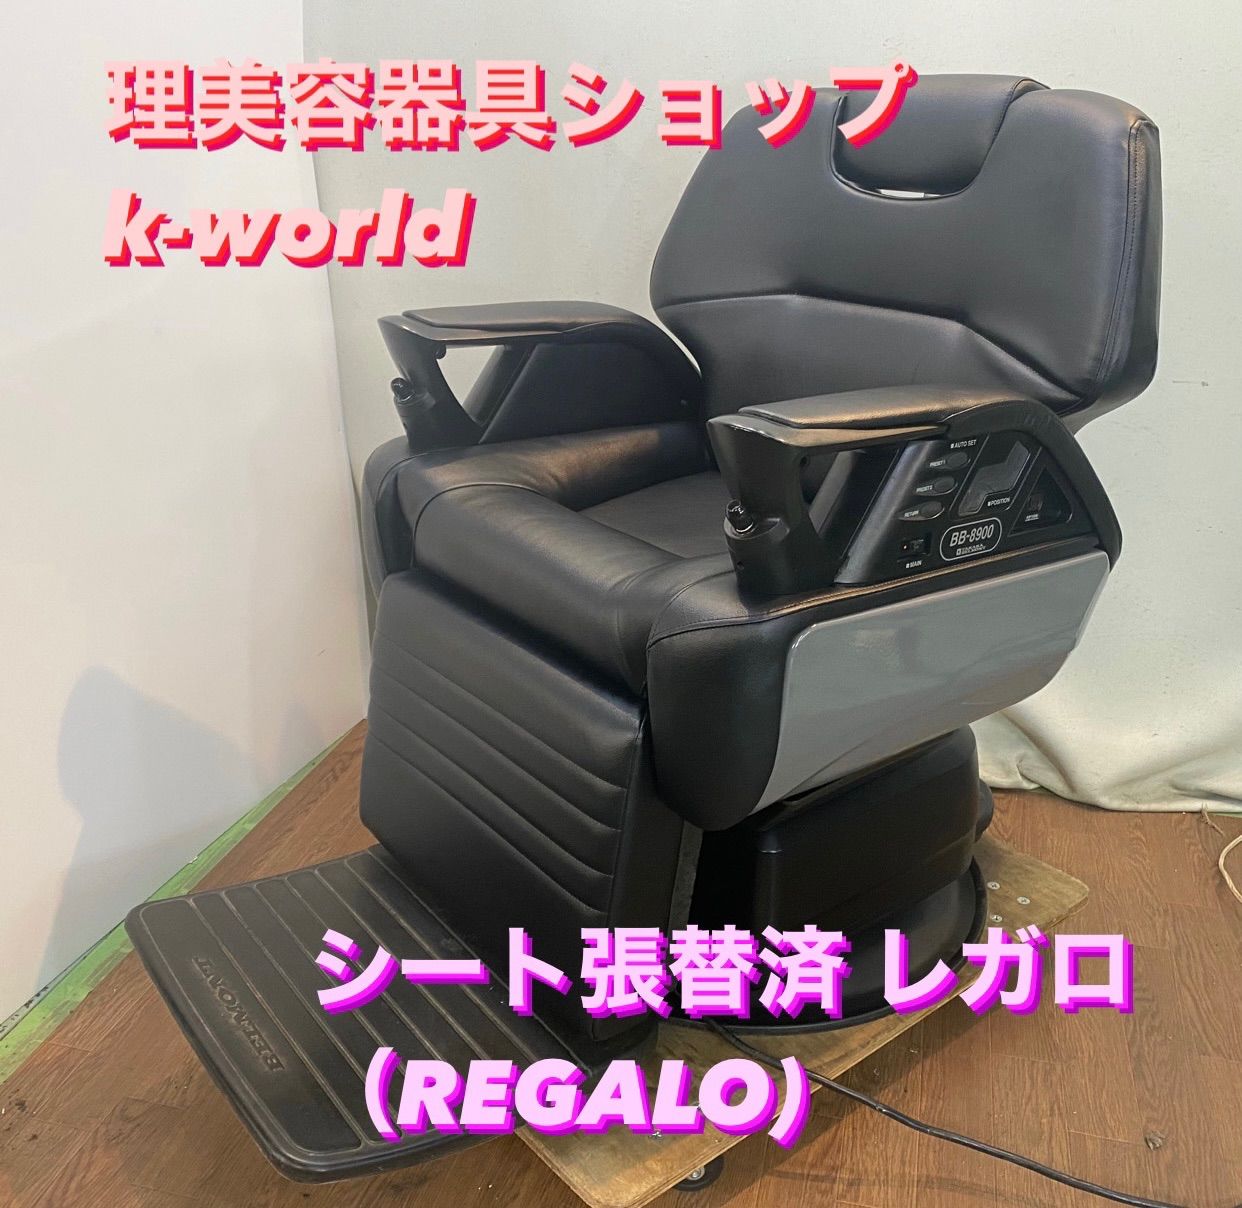 EC-898 シート張替済 レガロ （REGALO) - K-world理美容ショップ